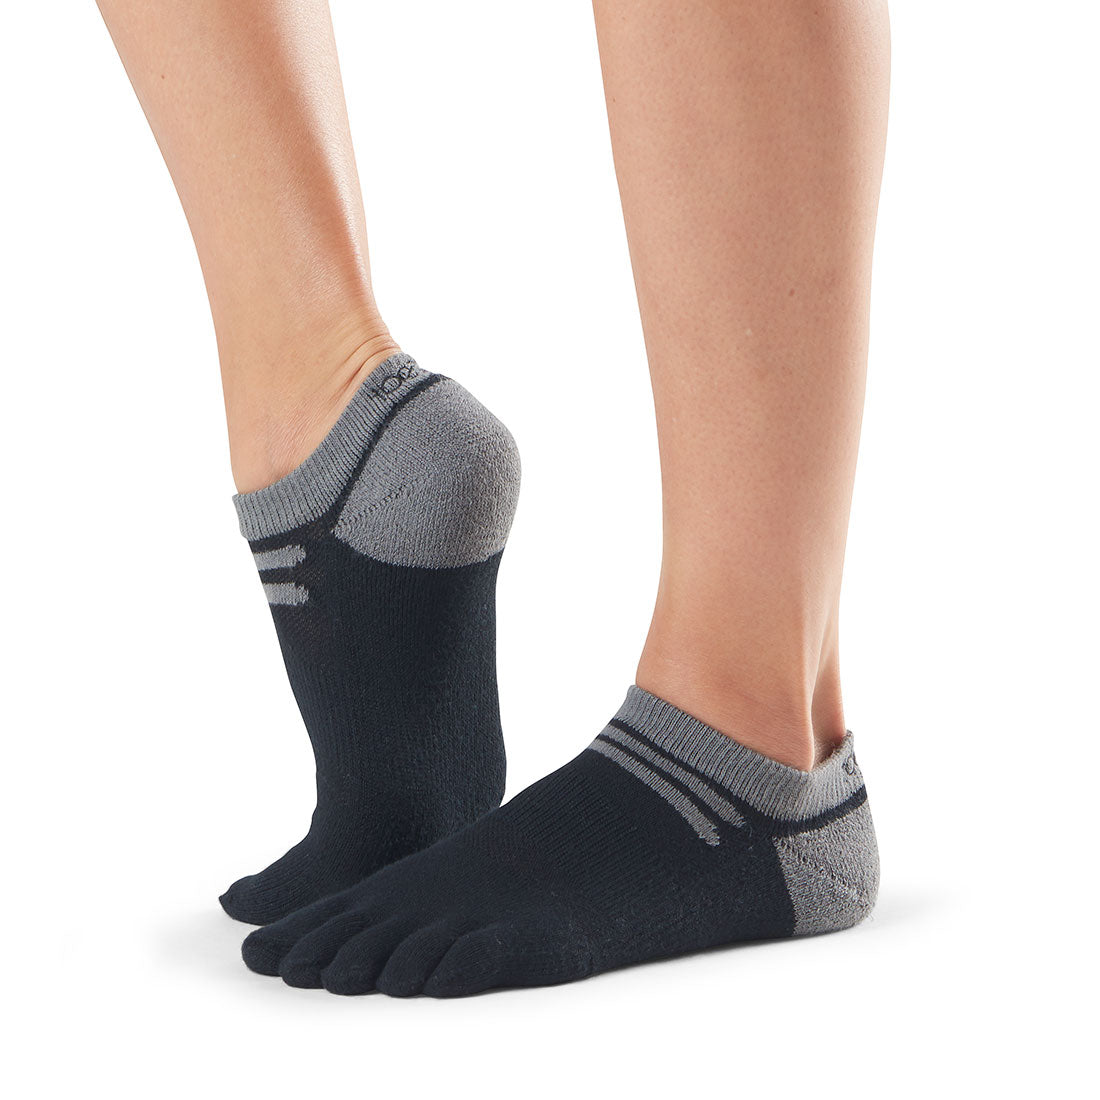 ToeSox - Bellarina Grip Socks - FALL COLLECTION 2020 - T8 Fitness